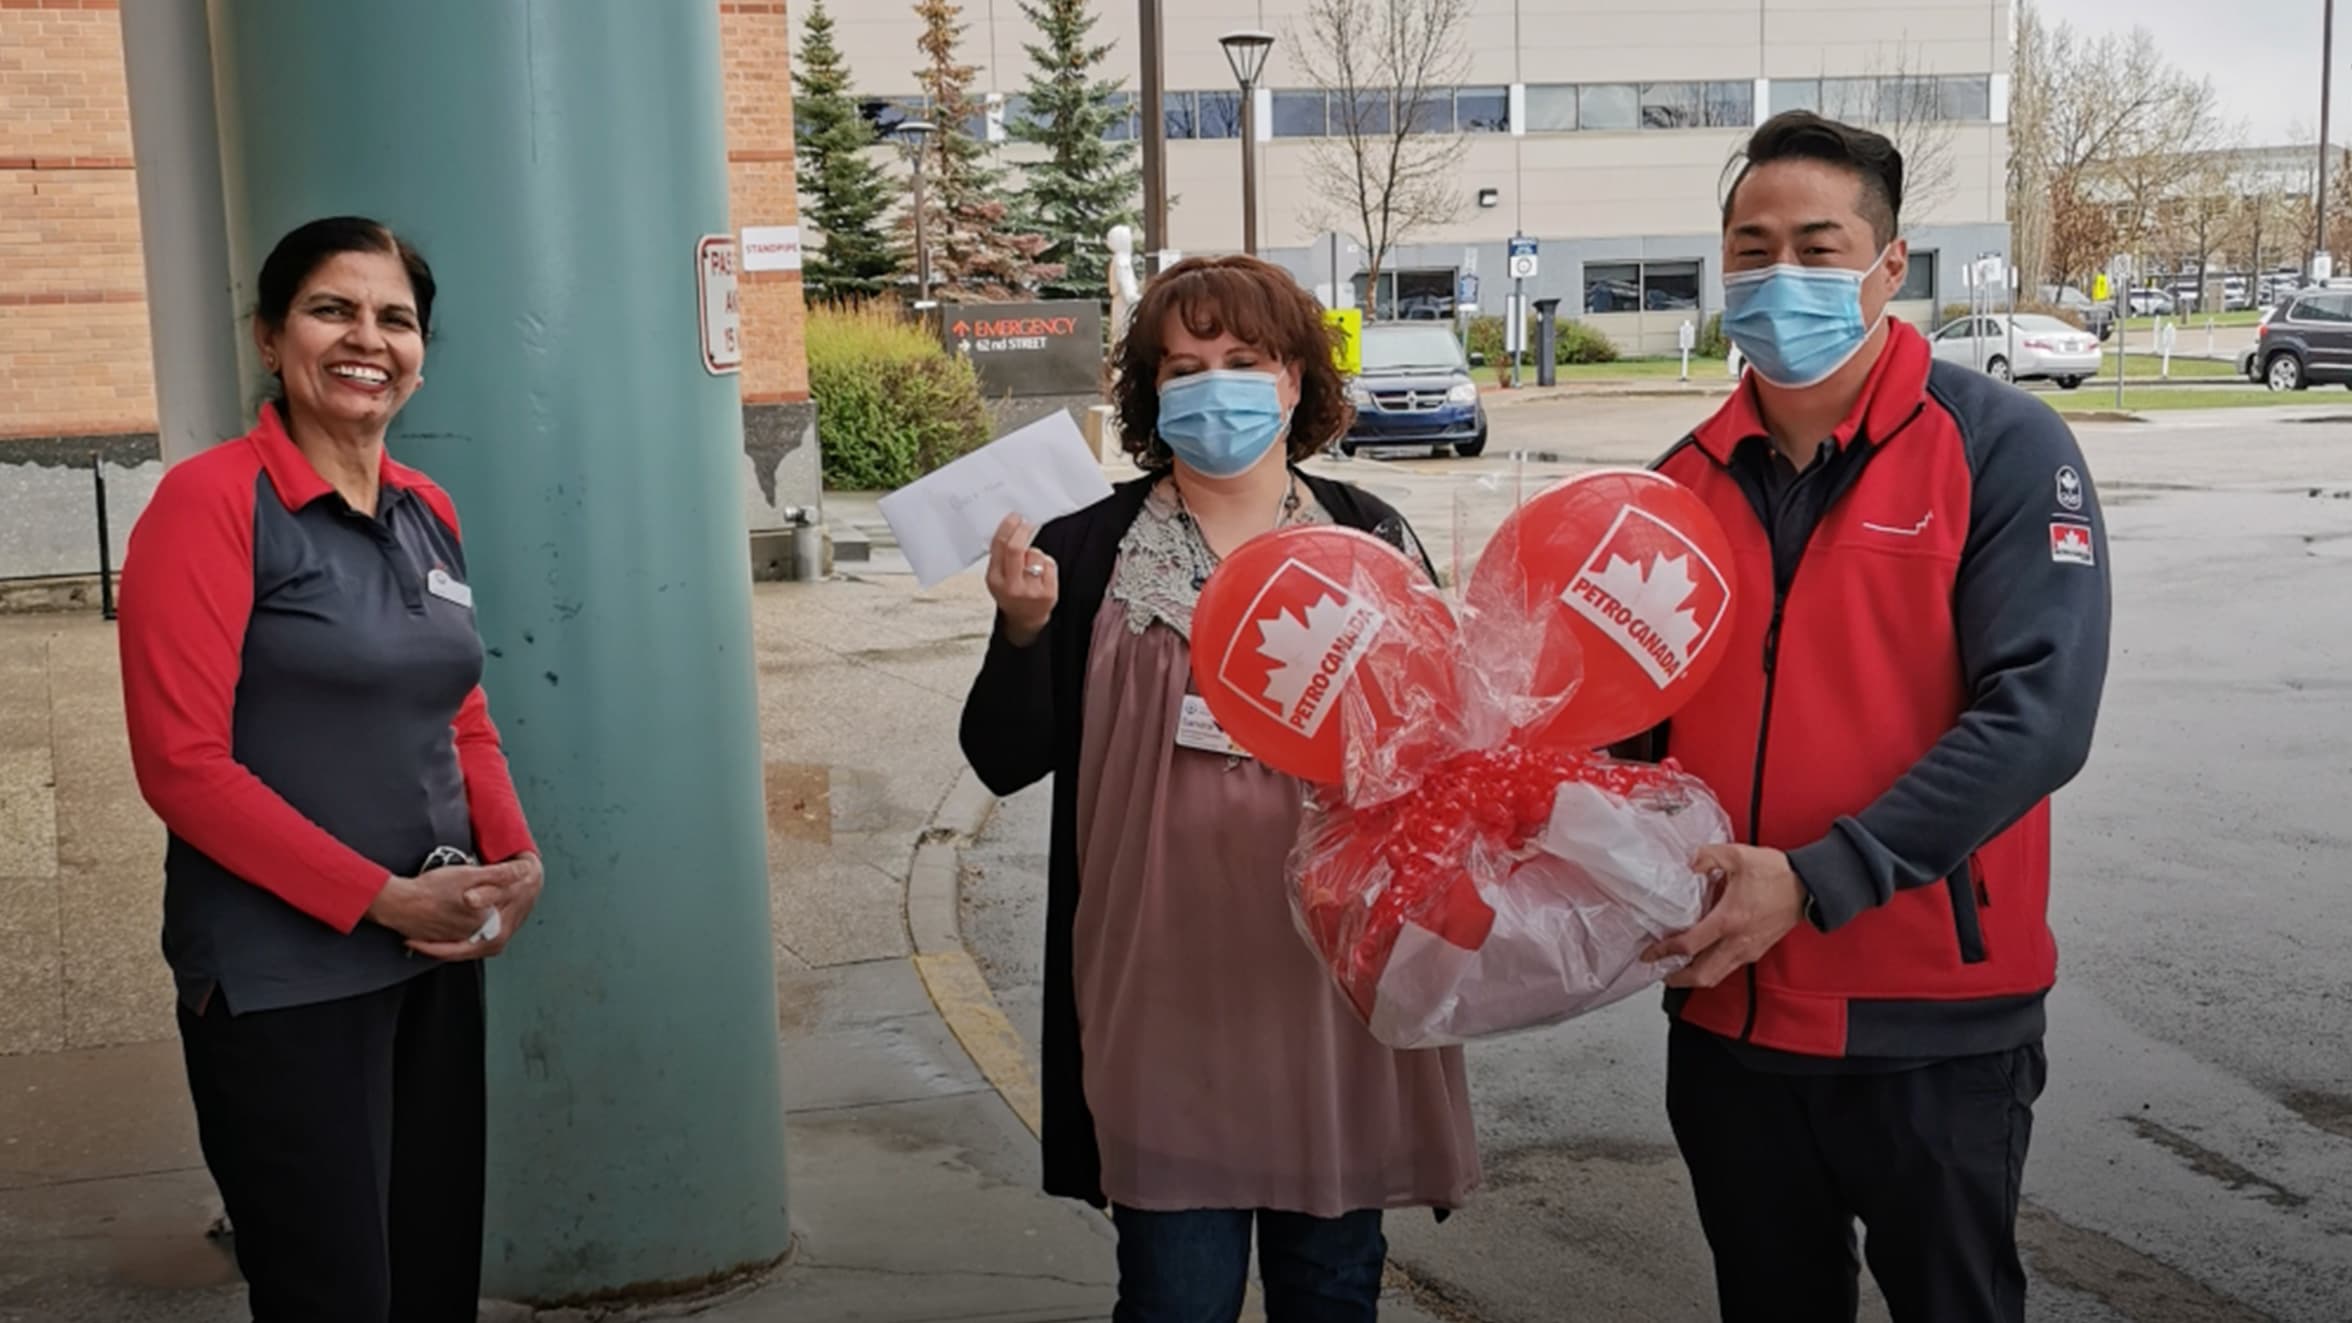 Les membres de l'équipe de Petro-Canada faisant un don à un hôpital.